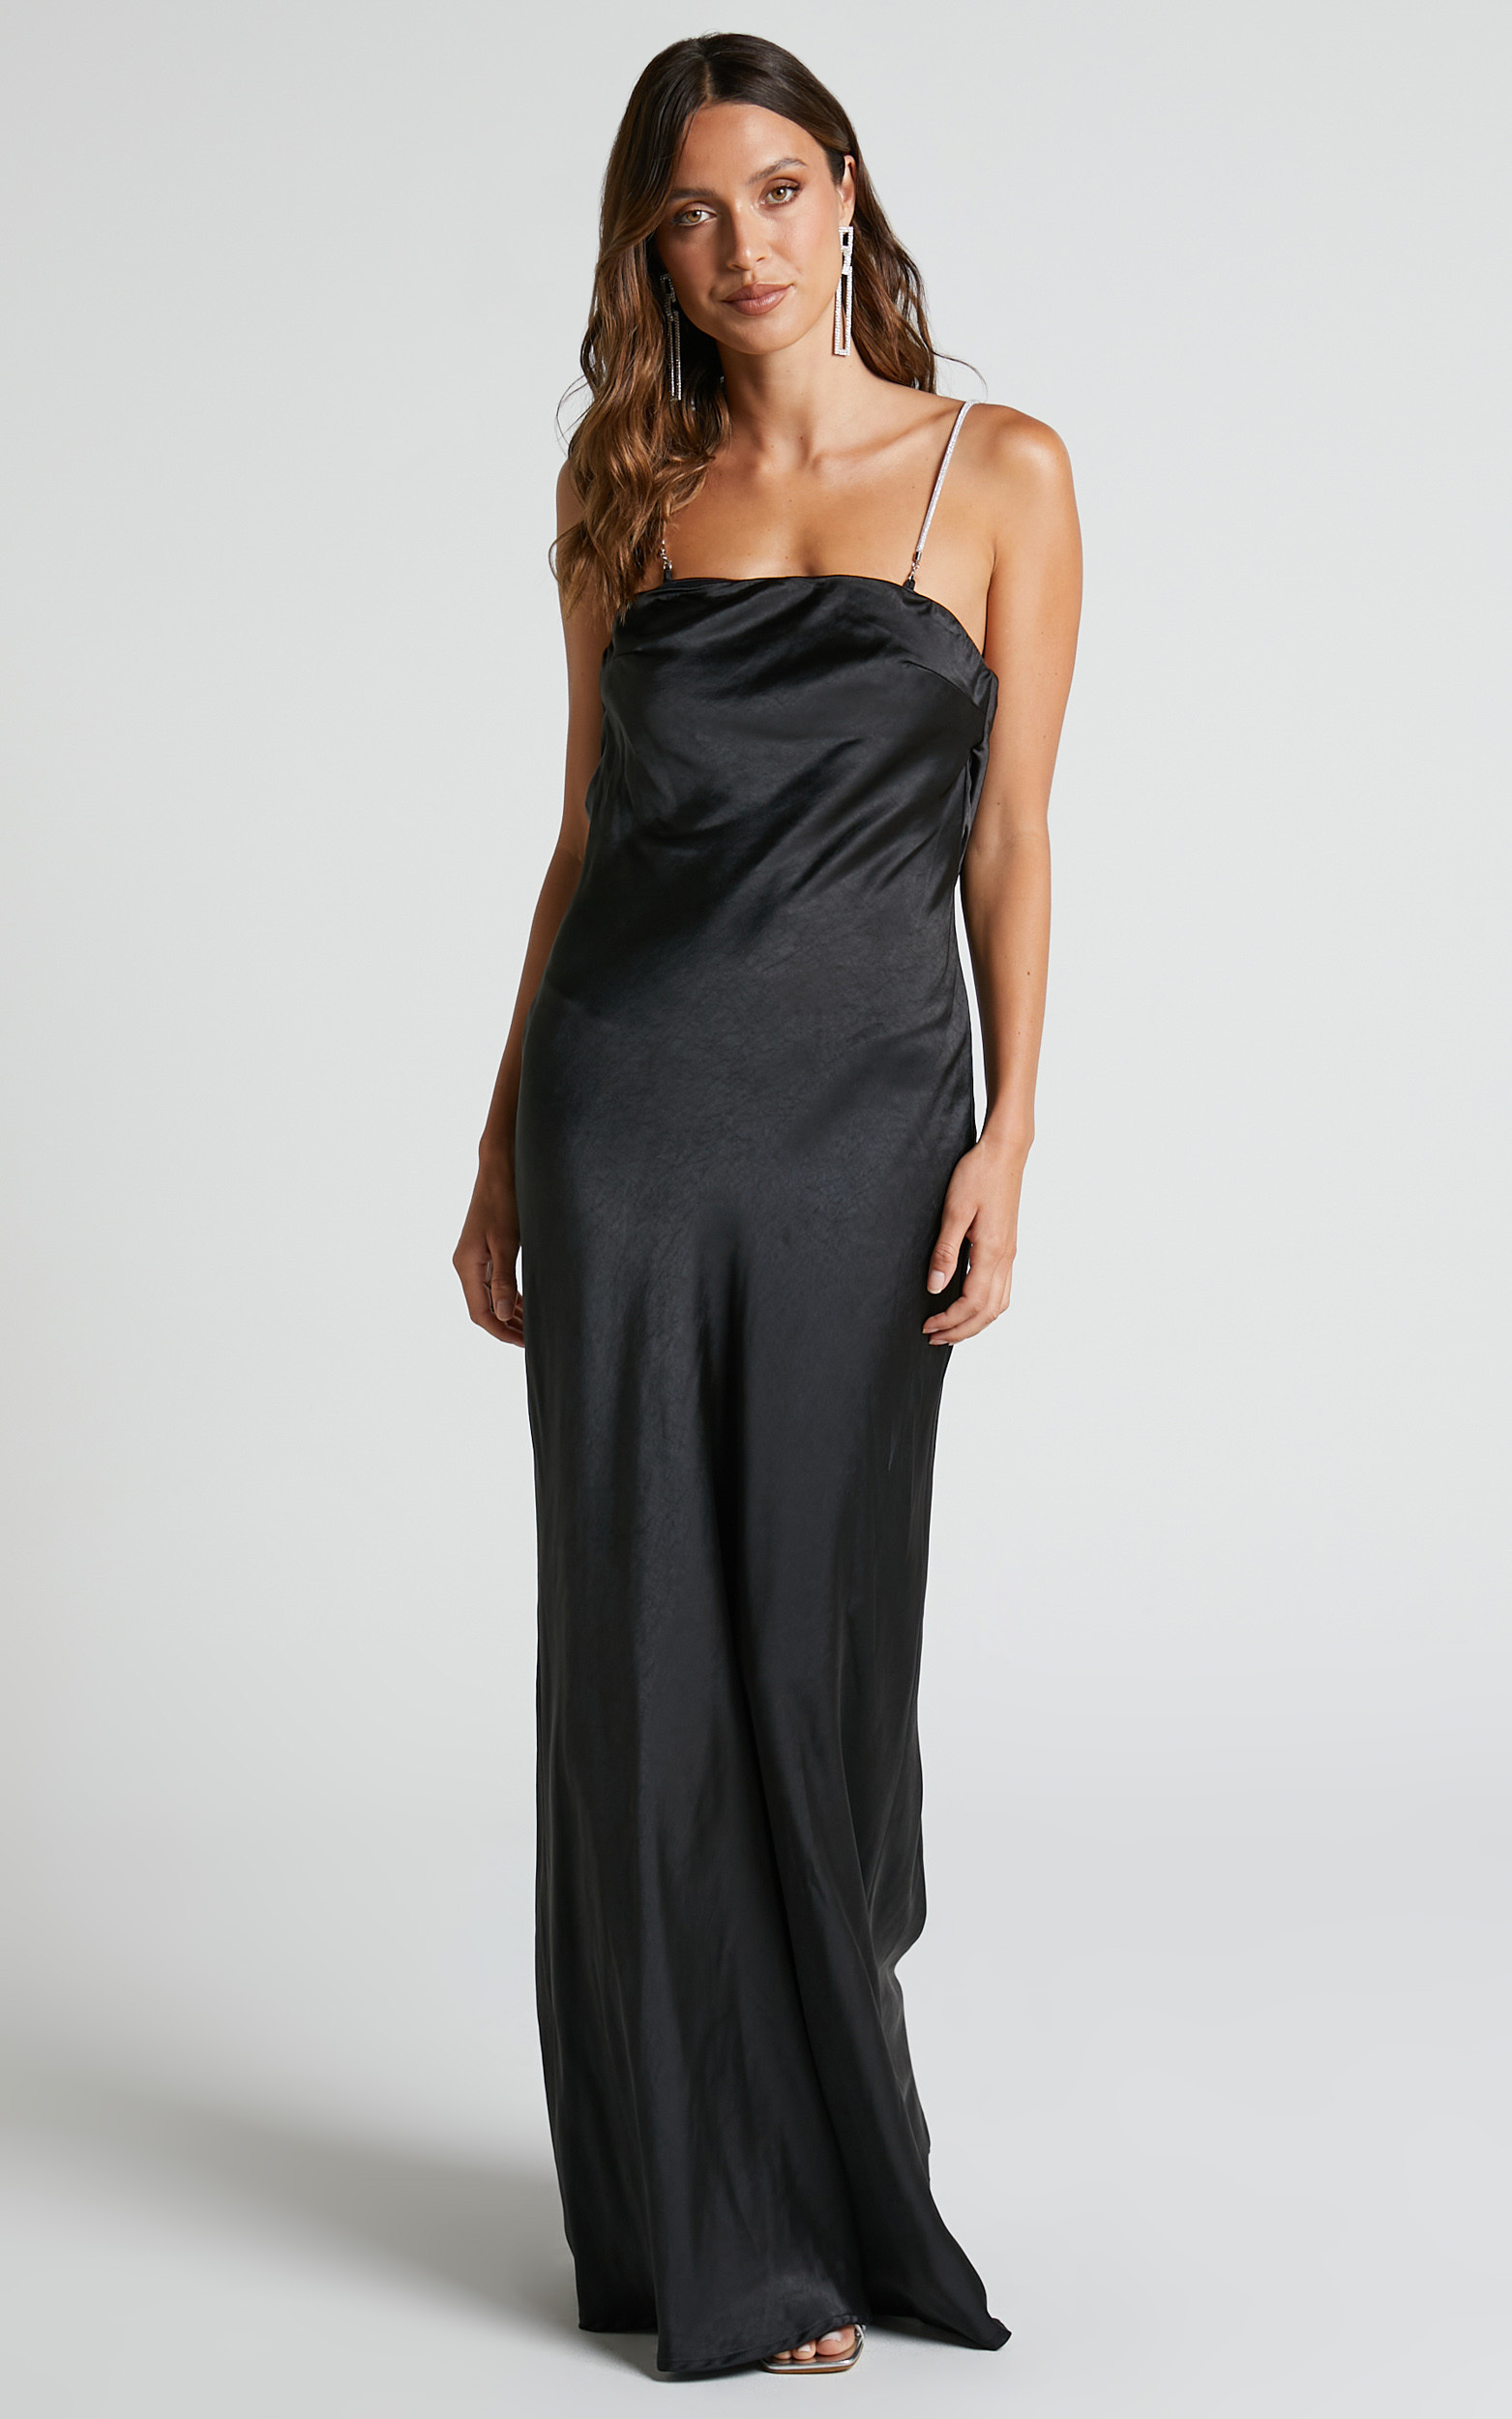 Arichie Maxi Dress - Cowl Back Diamante Strap Satin Dress in Black - 04, BLK1, hi-res image number null